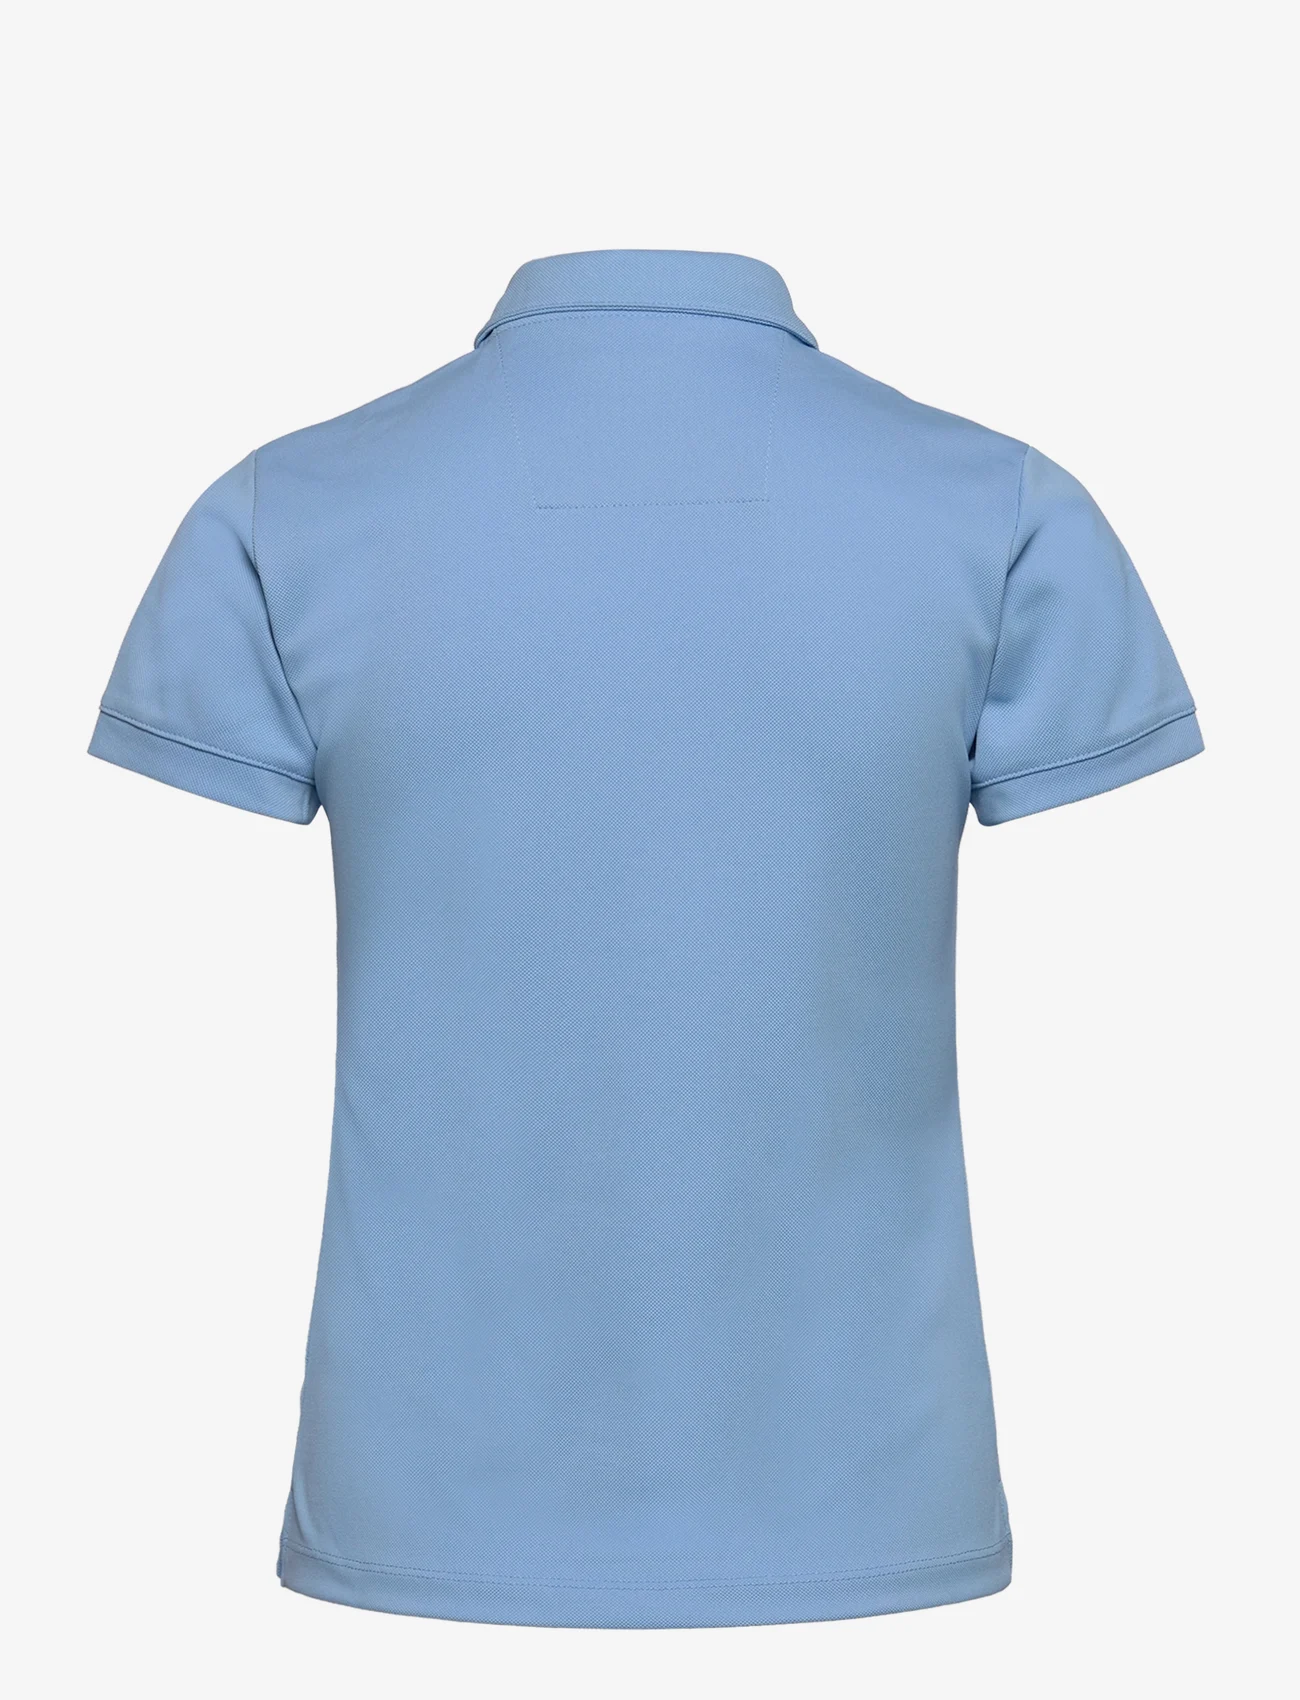 Lexton Links - Evelyn Poloshirt - koszulki polo - lightblue - 1